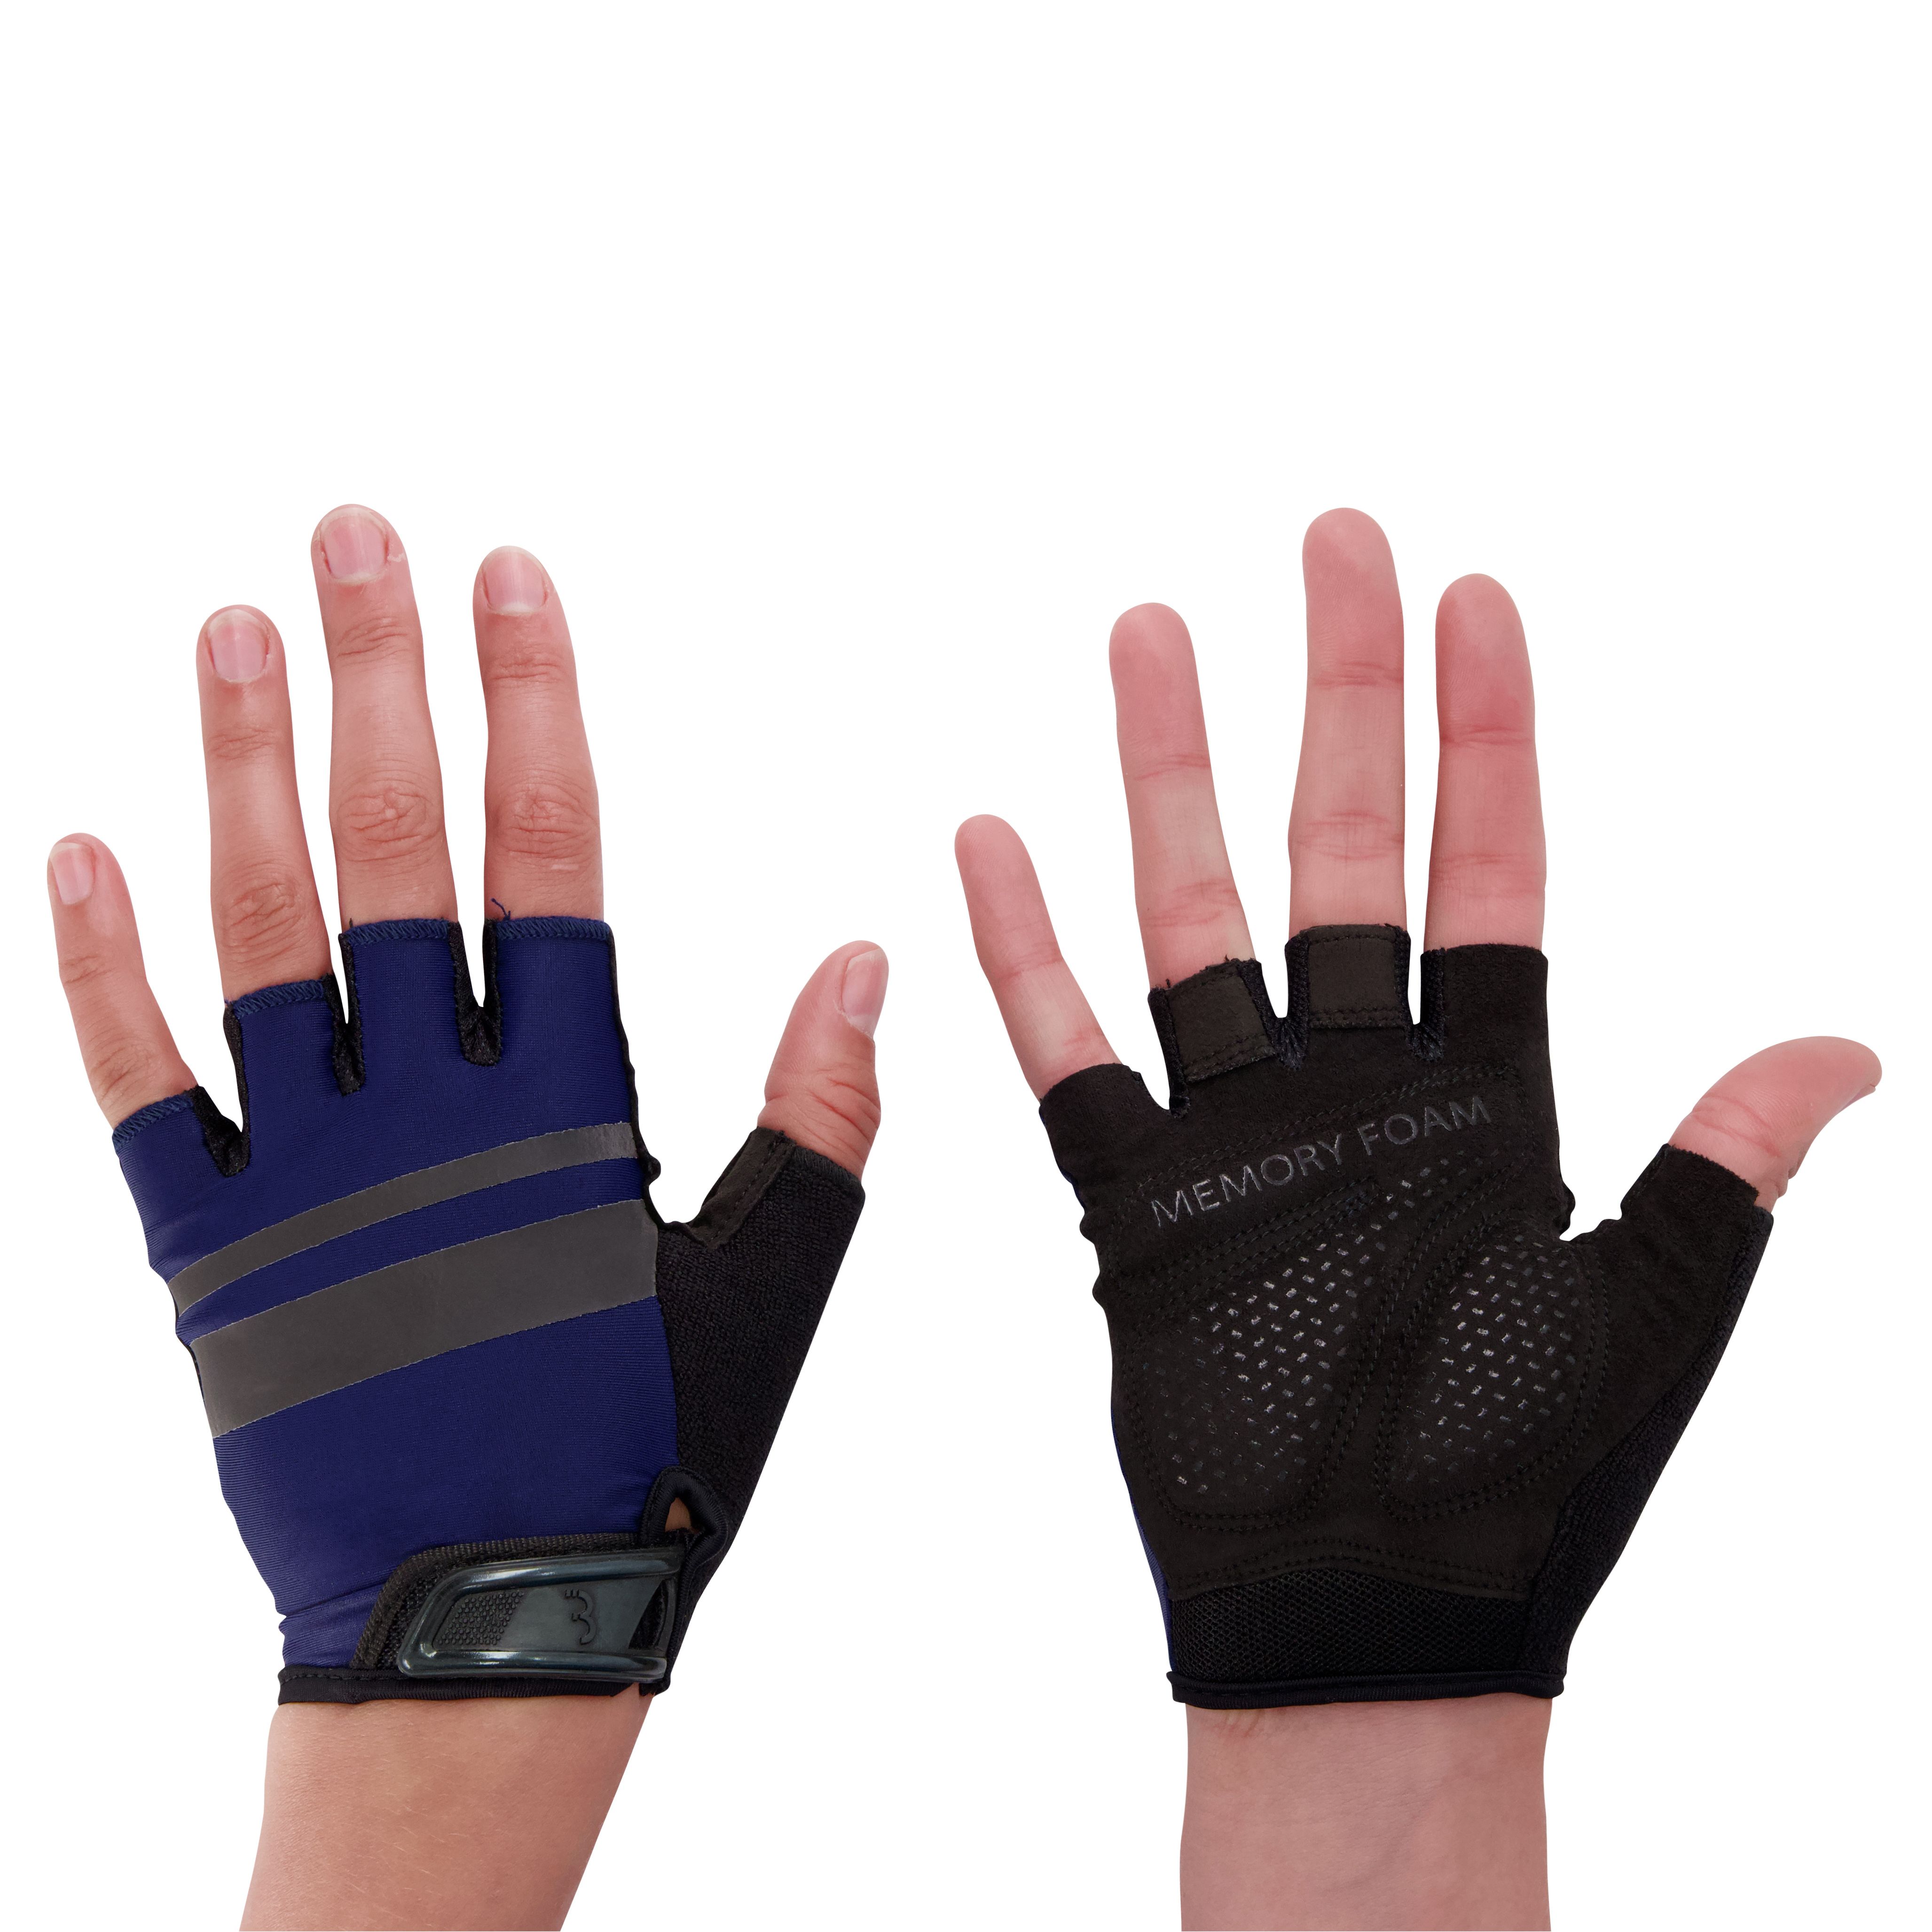 HighComfort 2.0 gloves